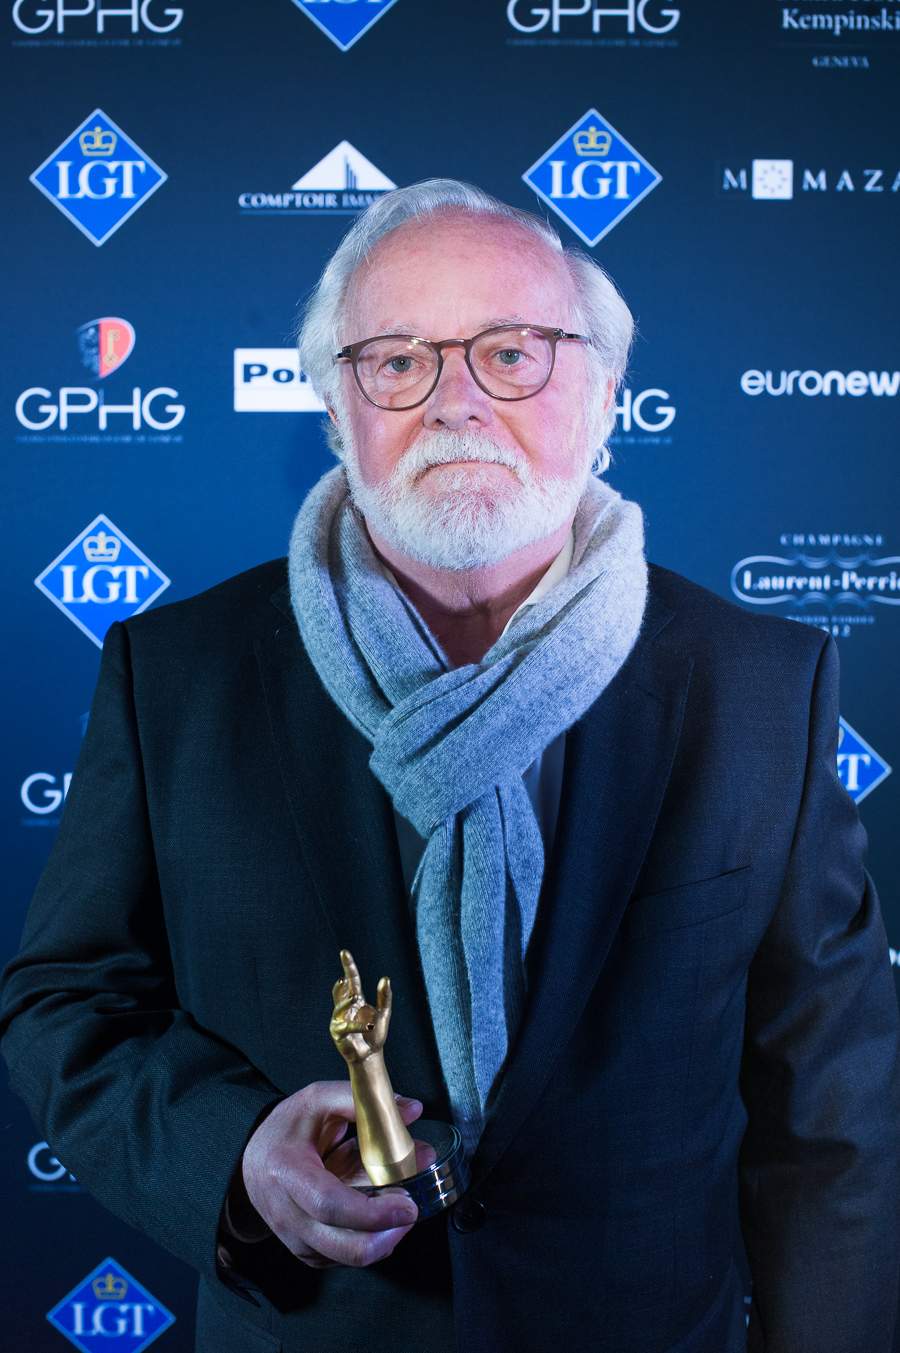 Laurent Ferrier, Founder, winner of the Men’s Complication Watch Prize 2018